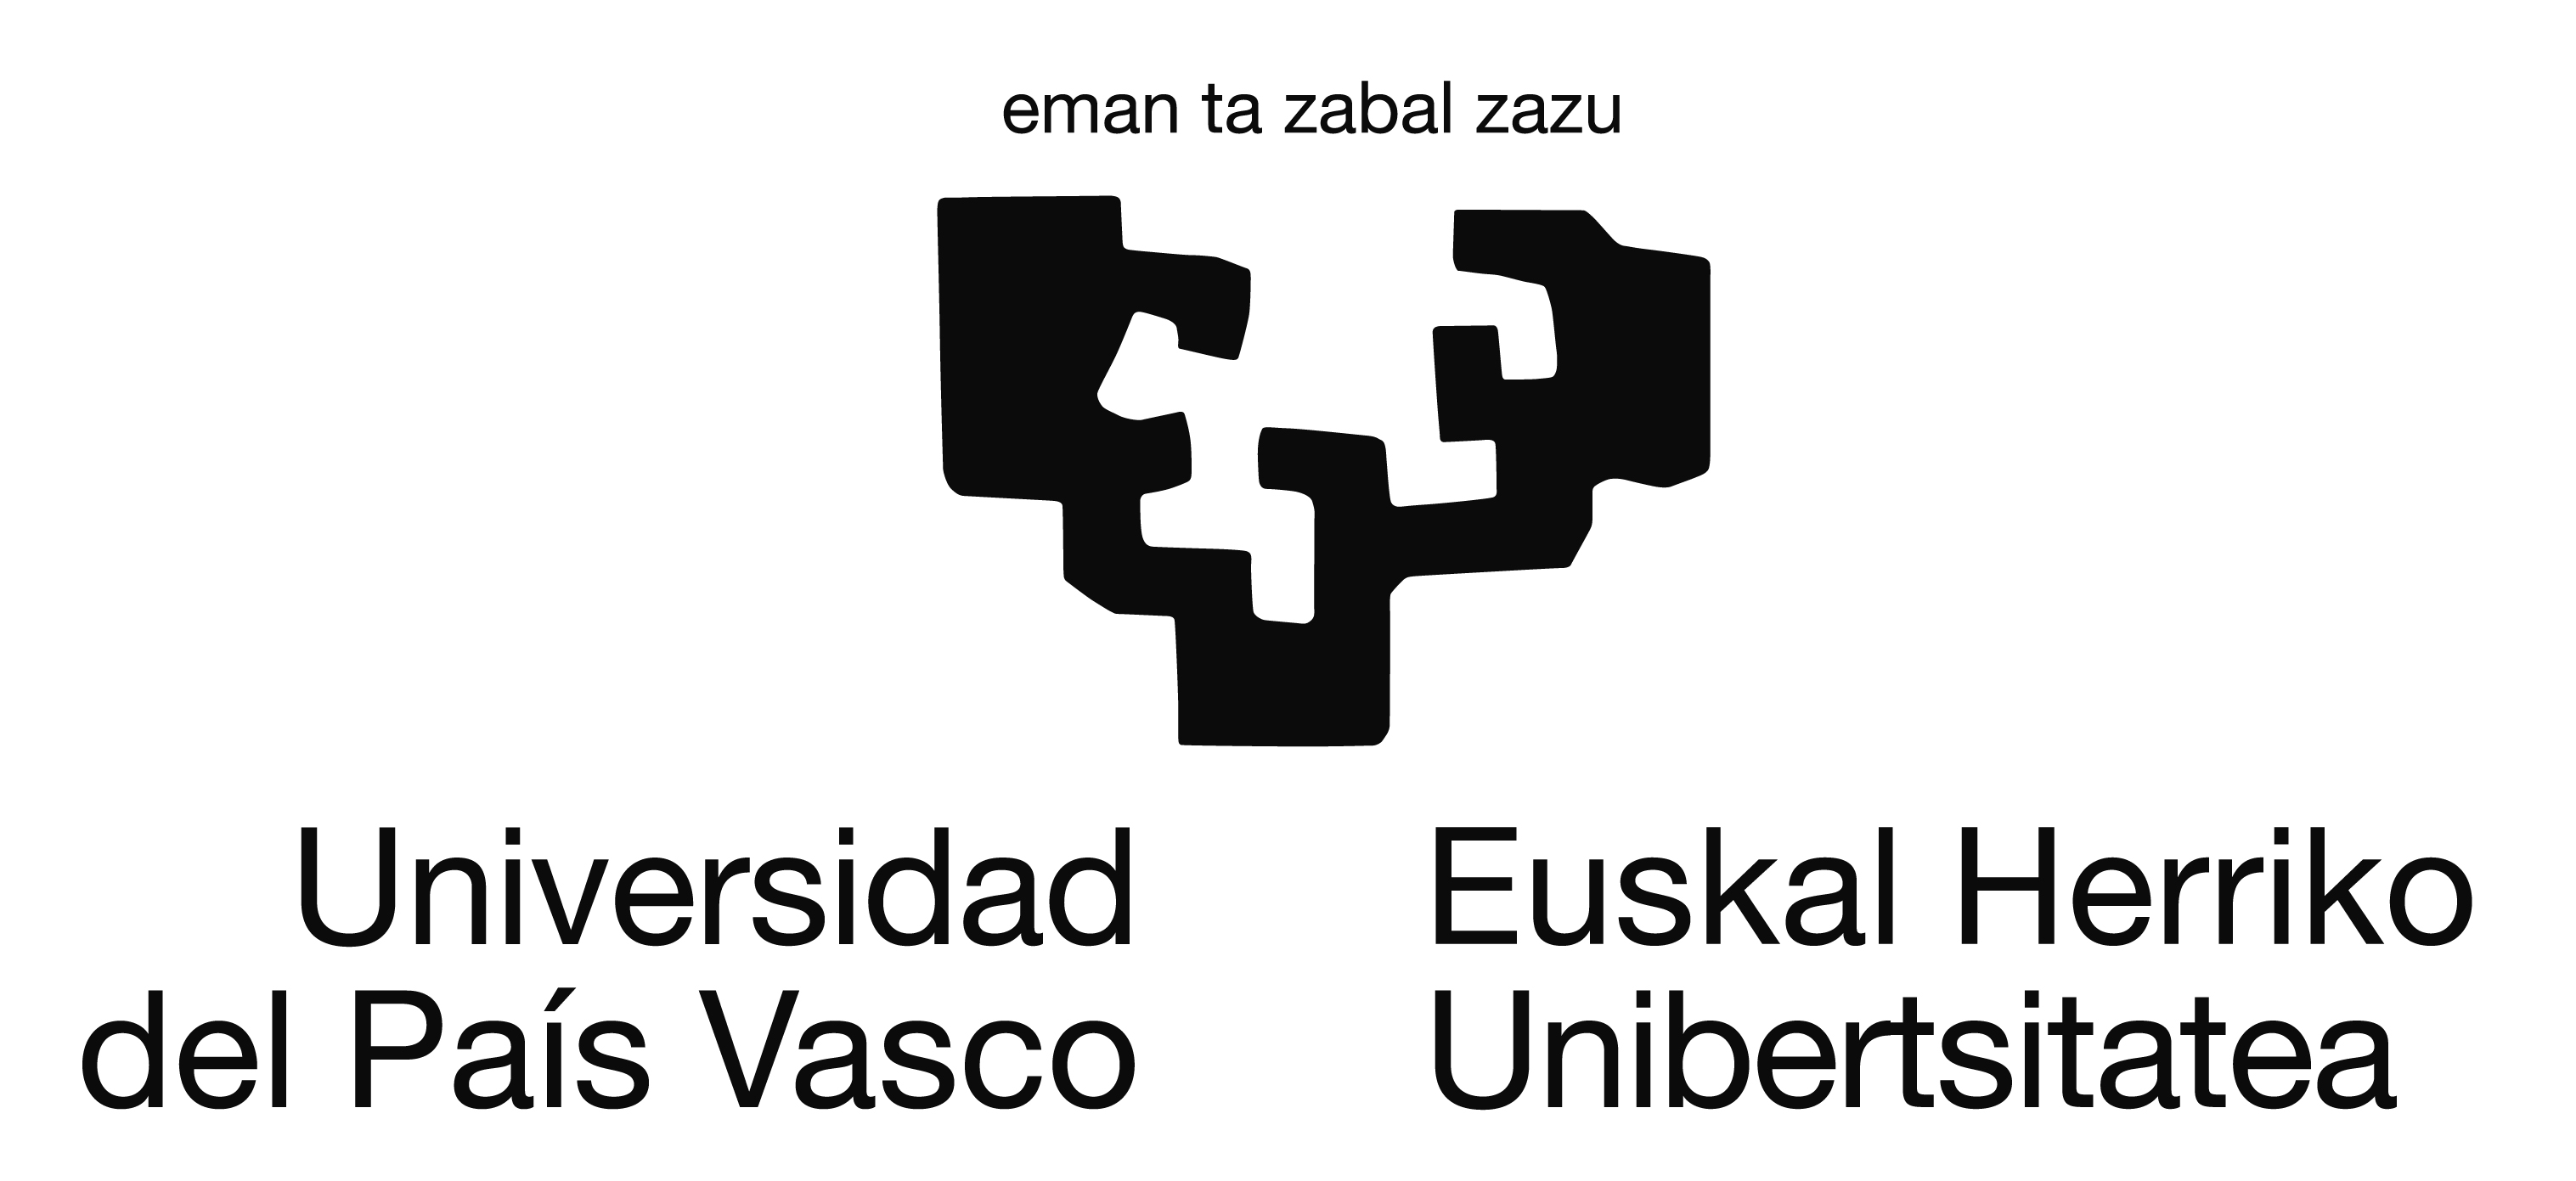 Universidad del País Vasco/Euskal Herriko Unibertsitatea/Université du Pays Basque (UPV/EHU)